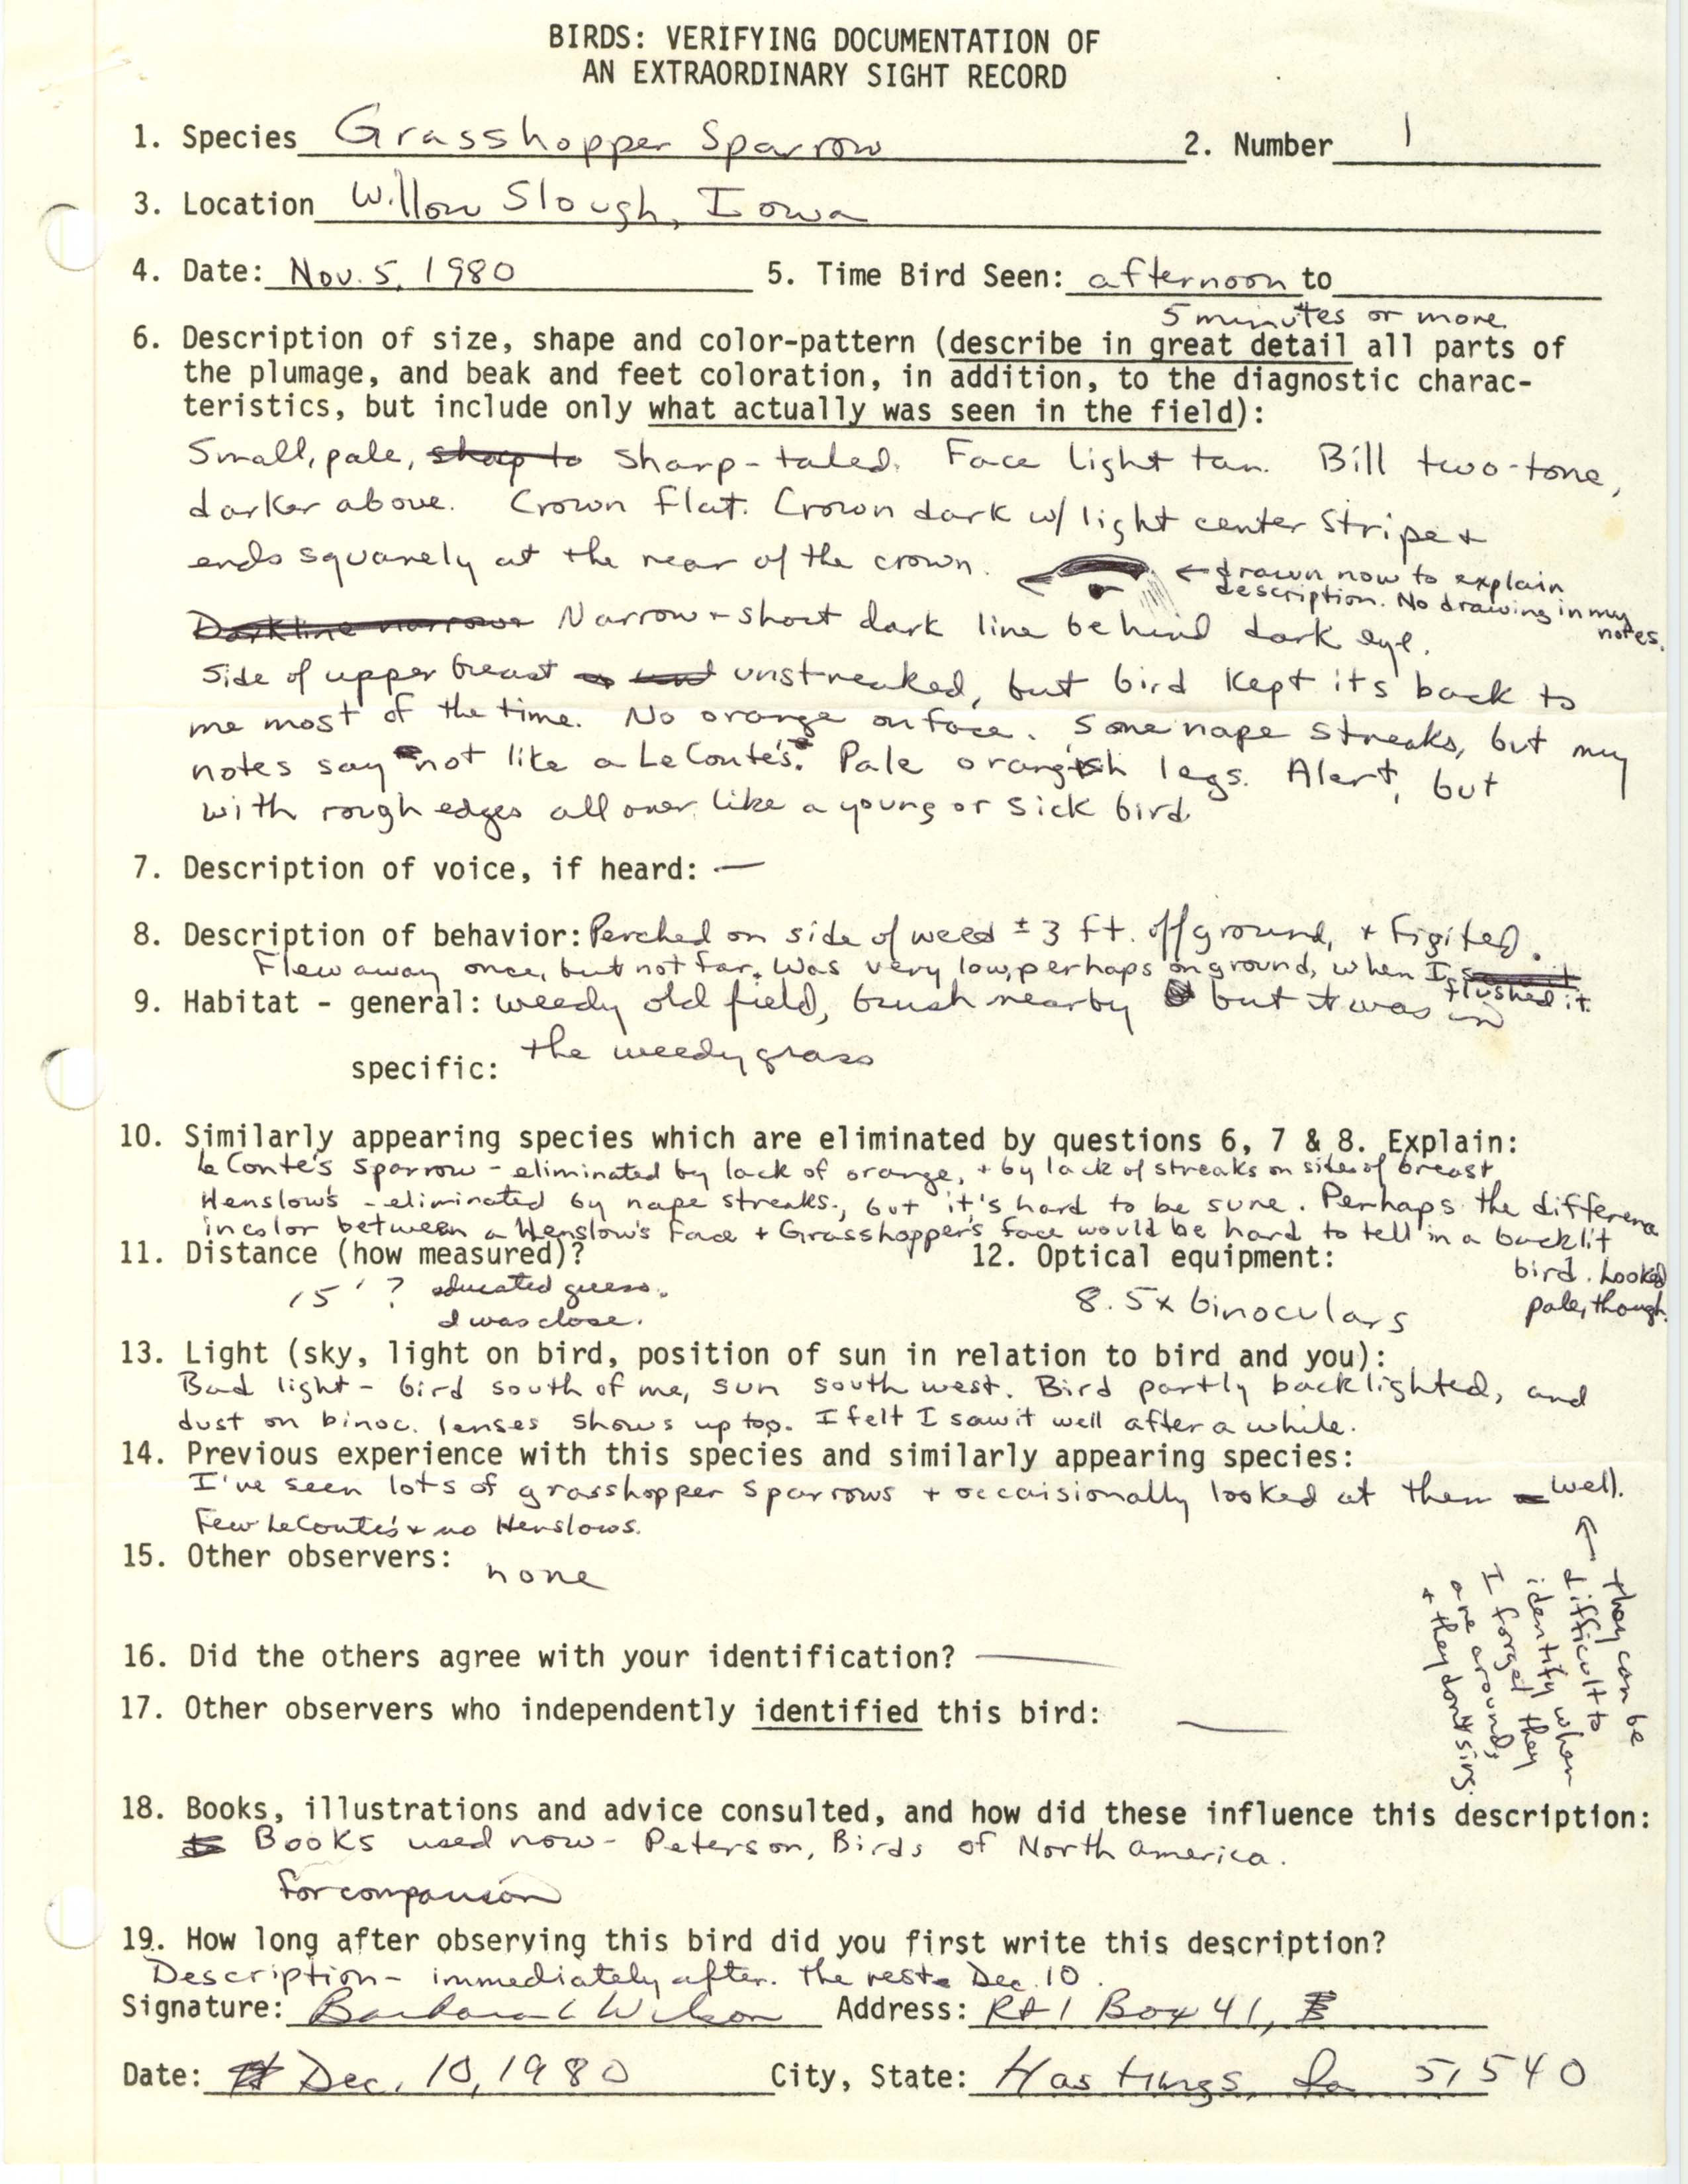 Rare bird documentation form for Grasshopper Sparrow at Willow Slough, 1980